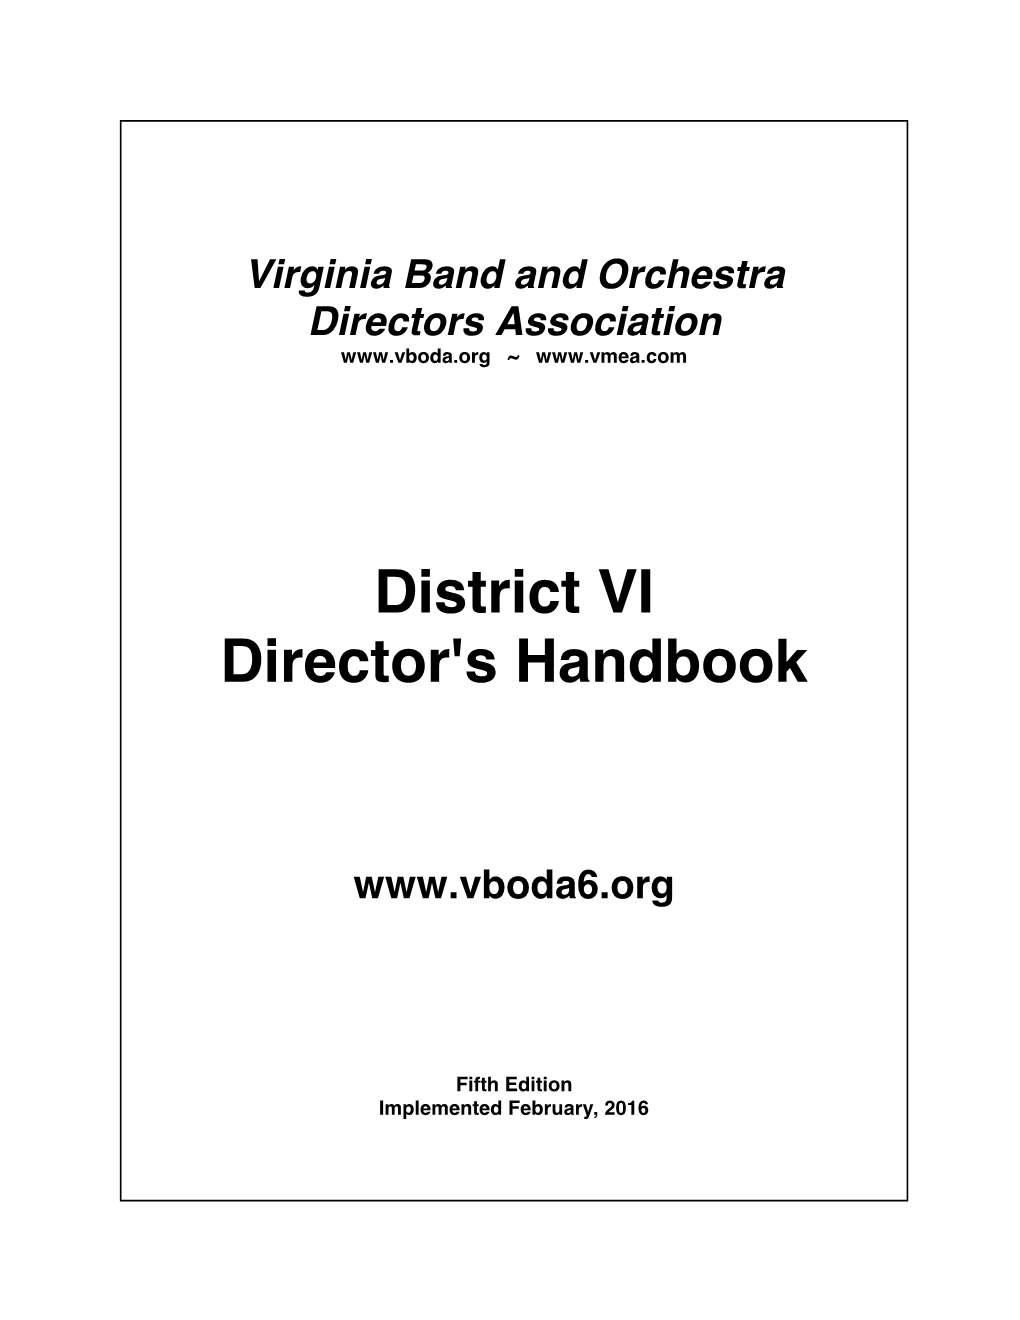 VBODA Handbook